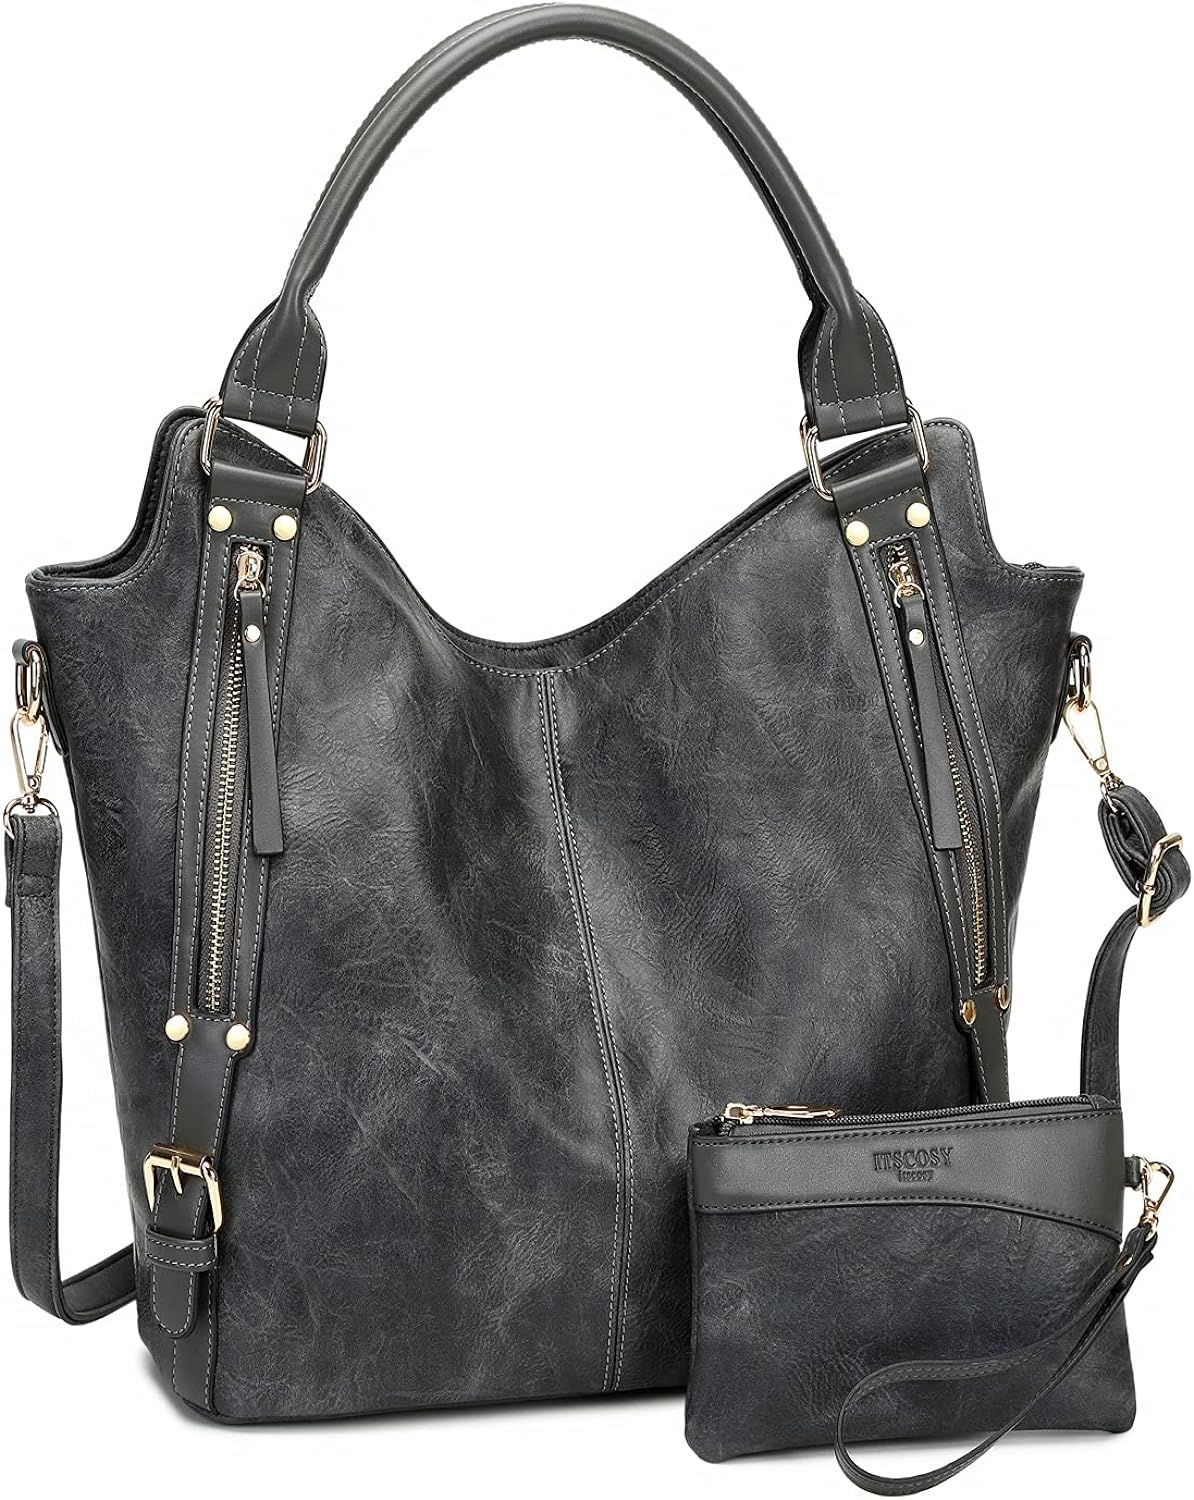 Women Tote Bag Handbags PU Leather Fashion Hobo Shoulder Bags with Adjustable Shoulder Strap | Amazon (US)